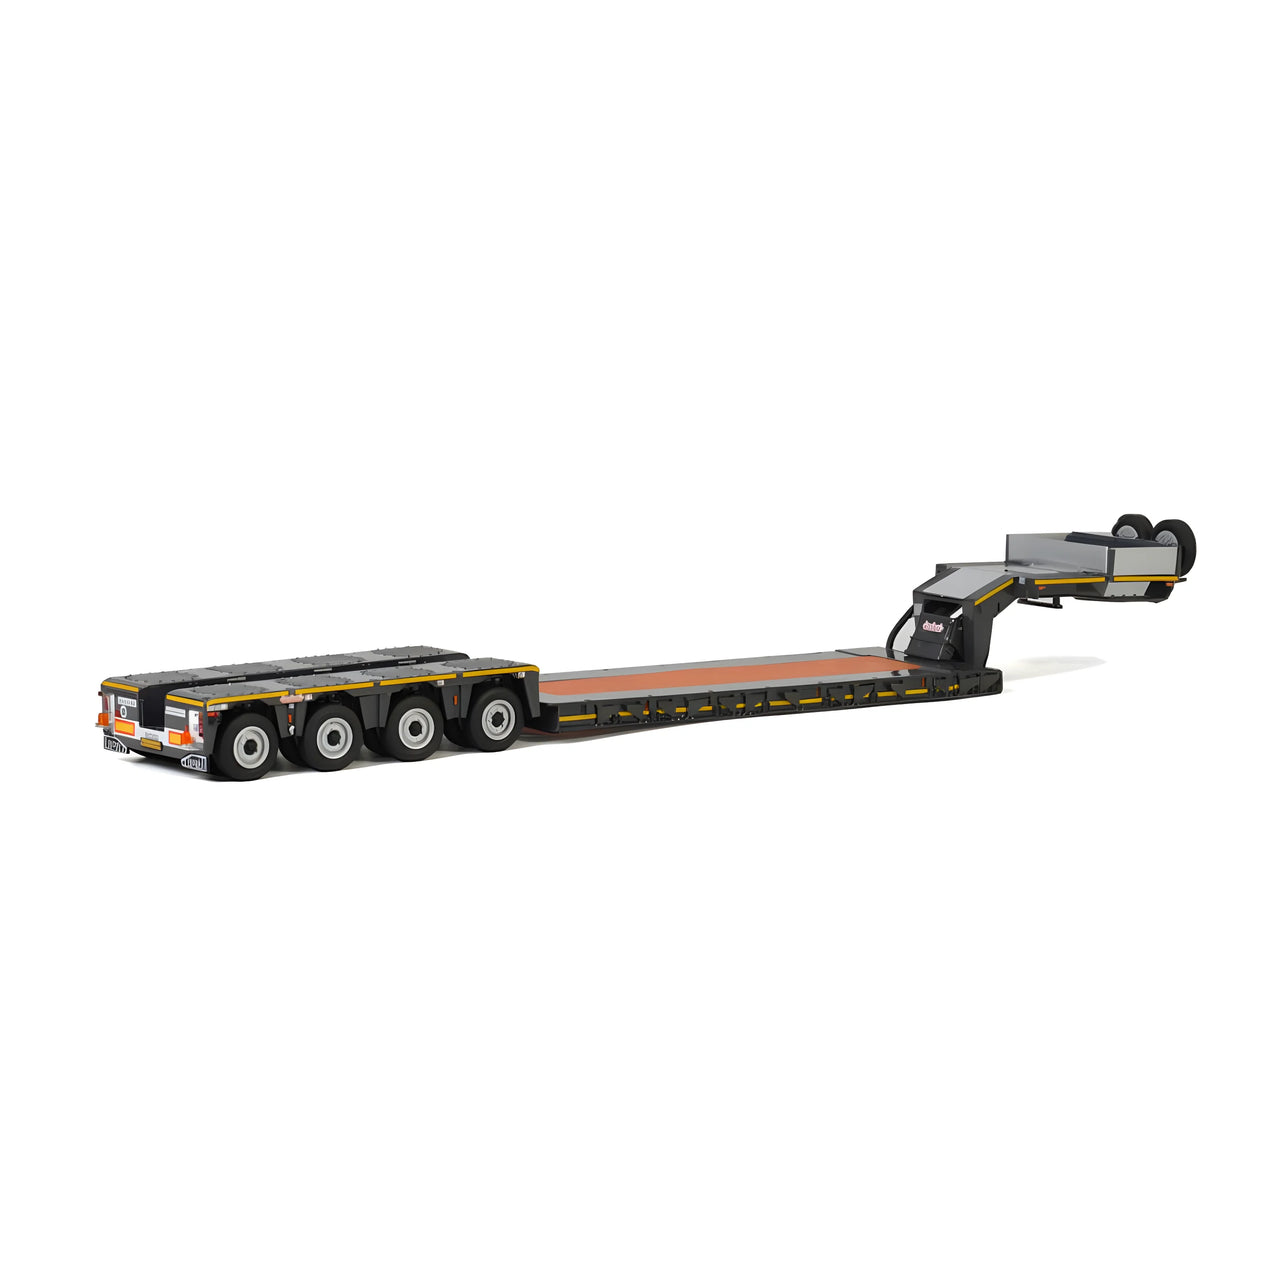 04-2081 Lowboy 4-Axle Platform 1:50 Scale